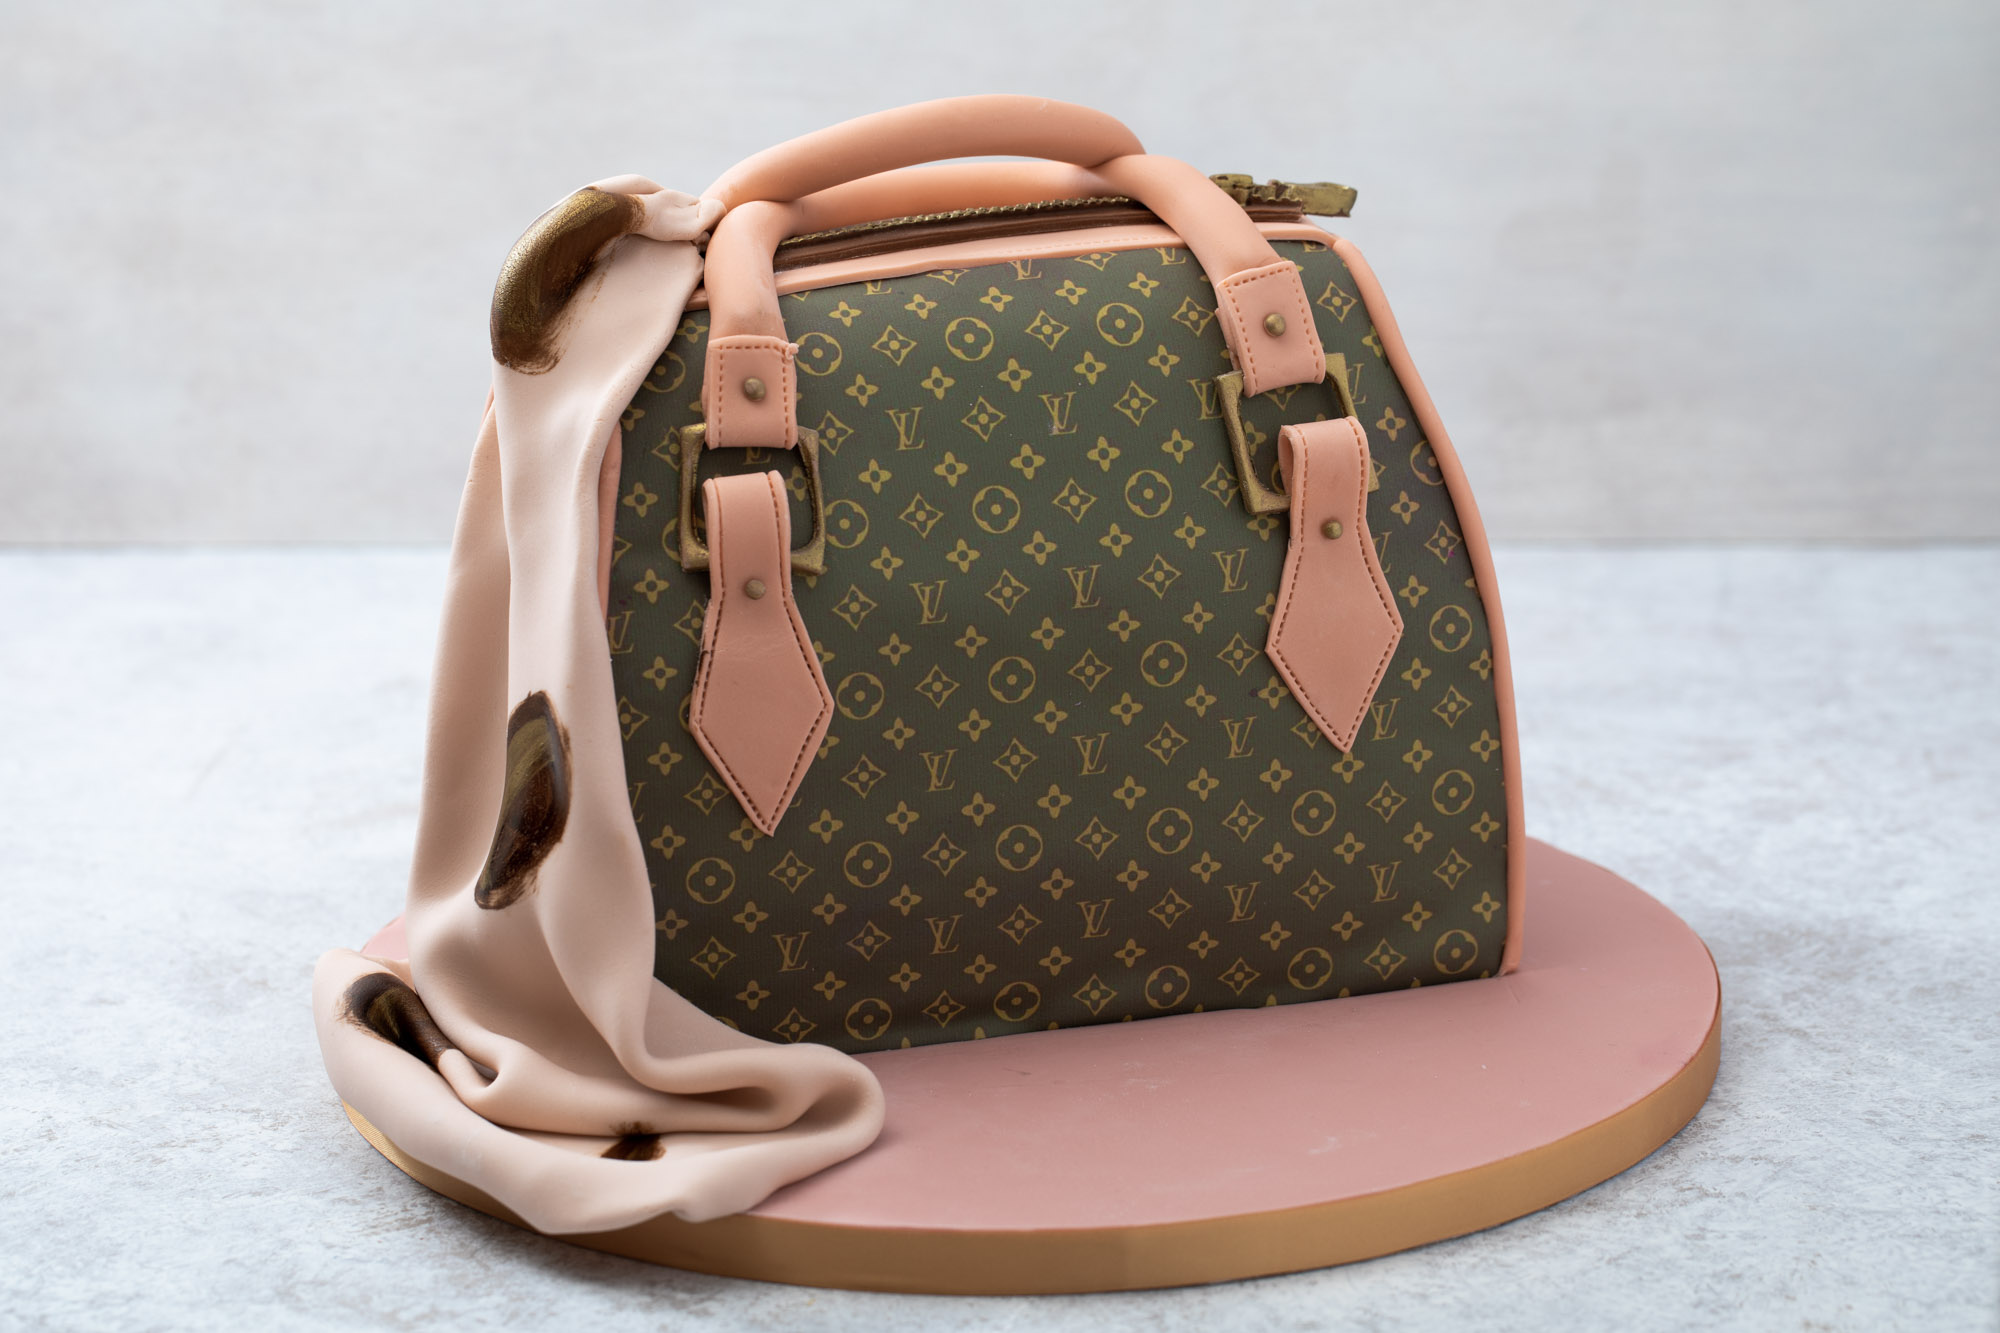 Louis Vuitton Hand Bag Cake 3